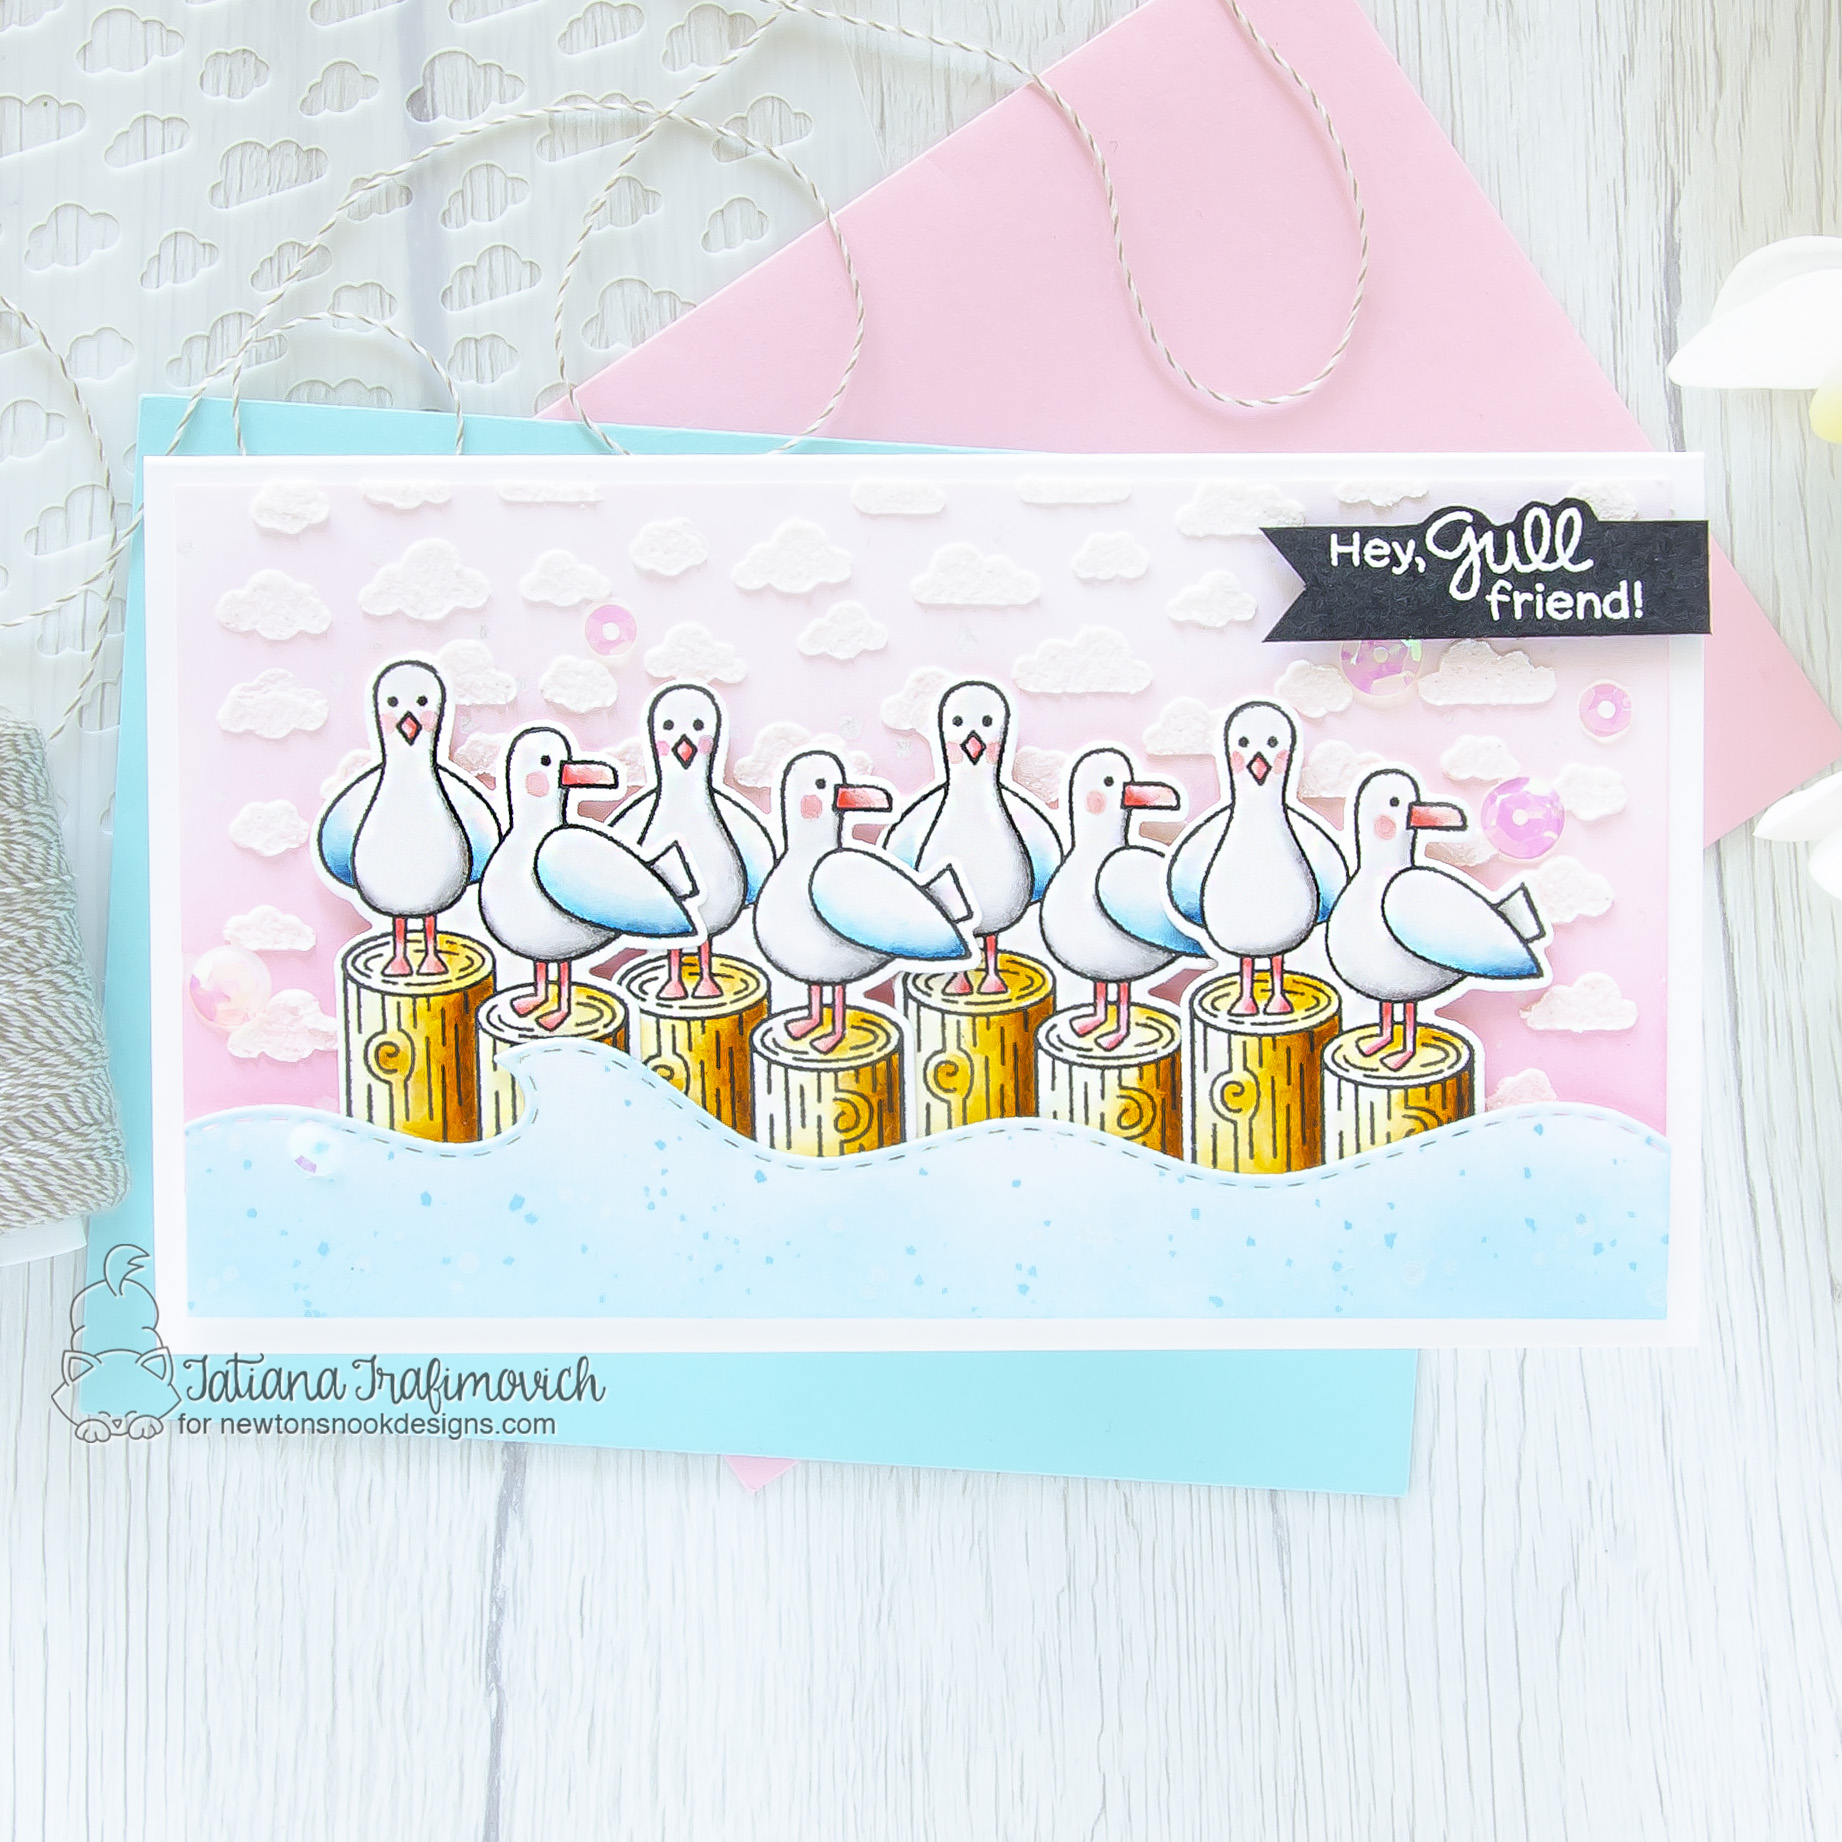 Hey, Gull Friend! #handmade card by Tatiana Trafimovich #tatianacraftandart - Gull Friends stamp set by Newton's Nook Designs #newtonsnook